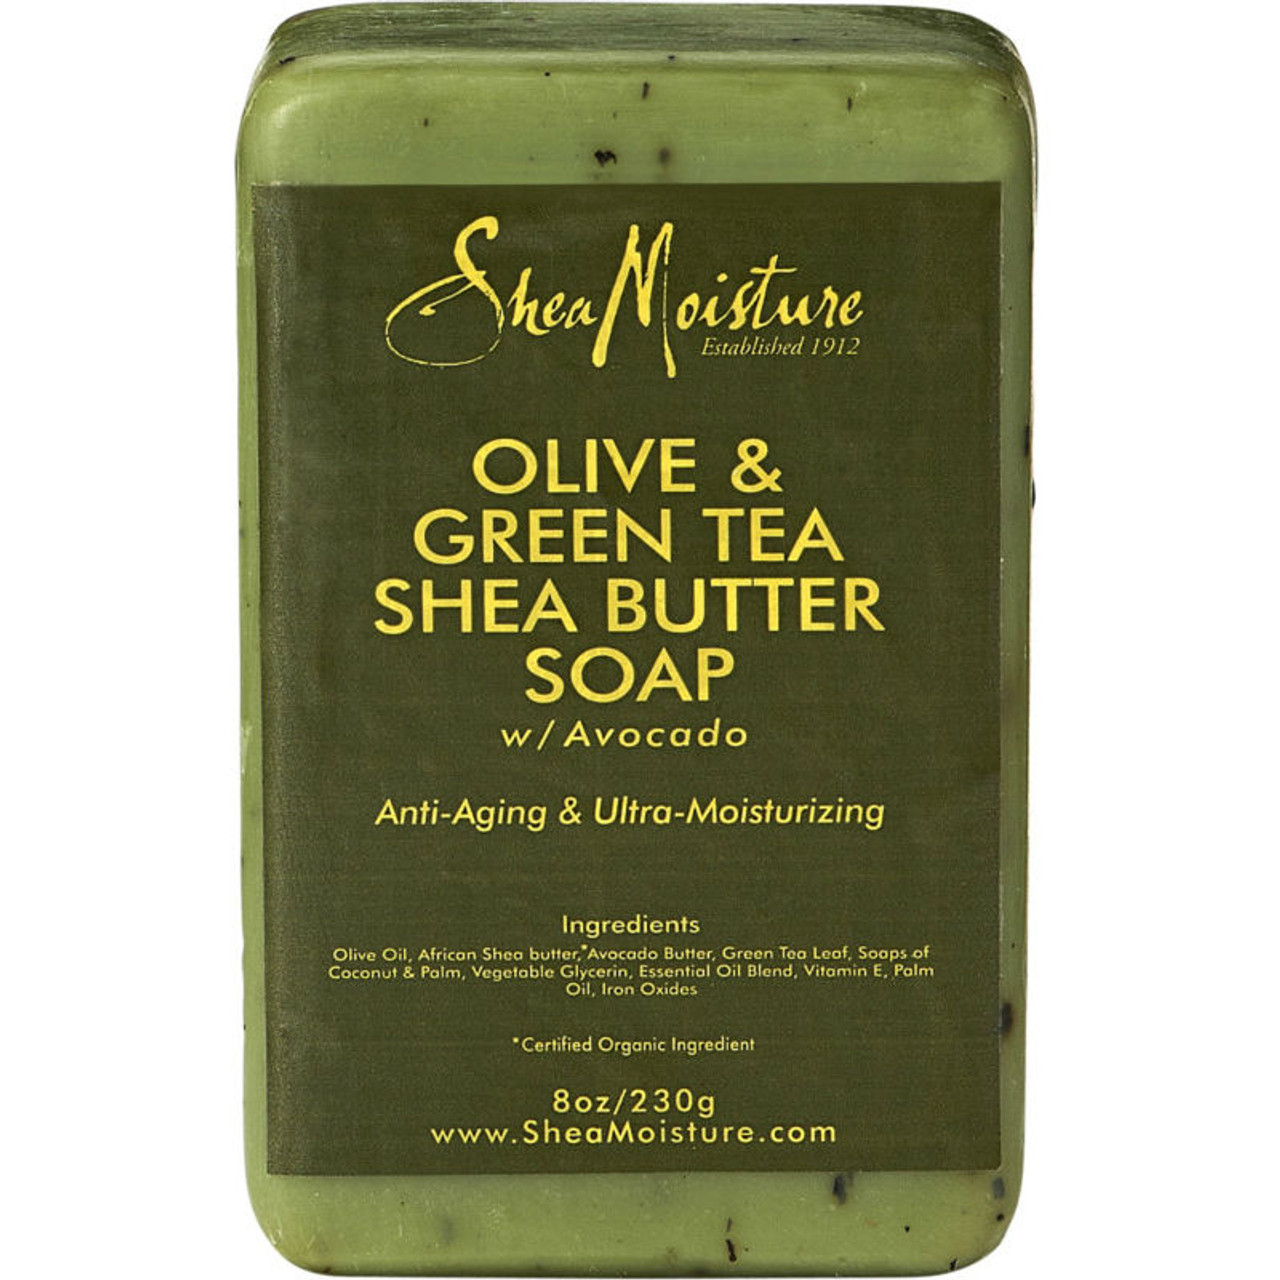 SheaMoisture Olive & Green Tea Shea Butter Soap Bar (8 oz.) - NaturallyCurly